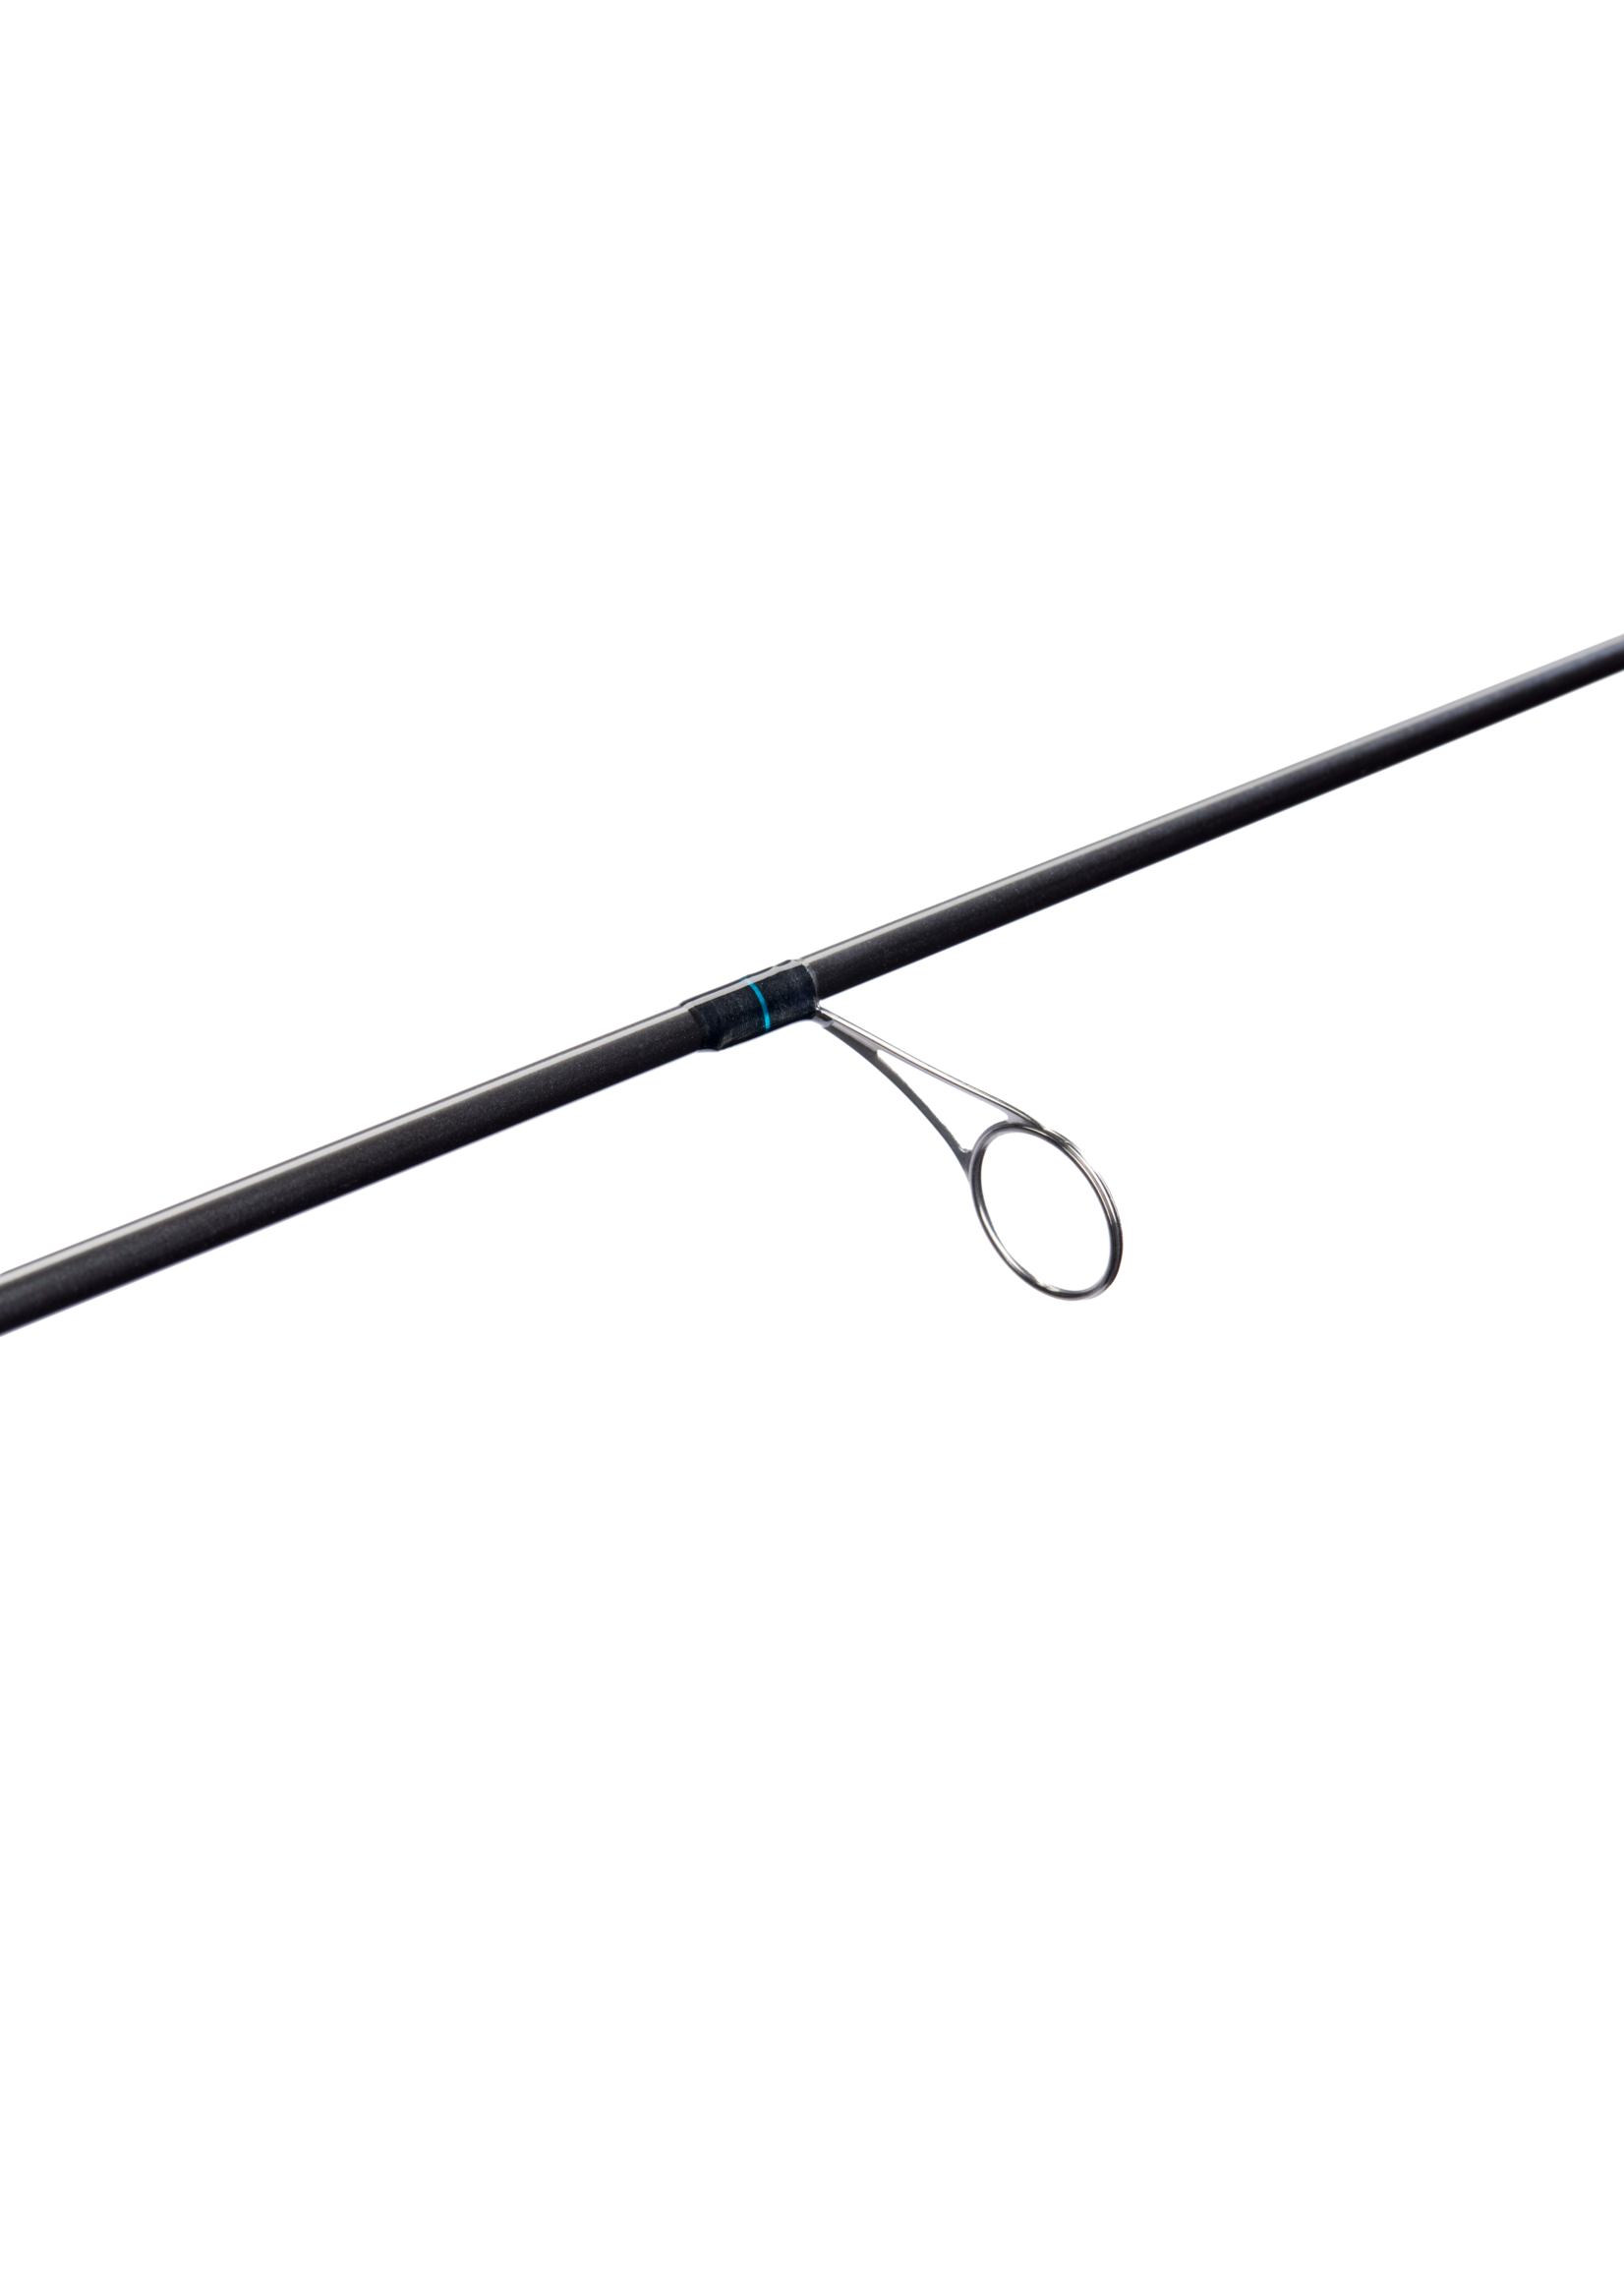 Avid Series Walleye Spinning Rod by St. Croix at Fleet Farm